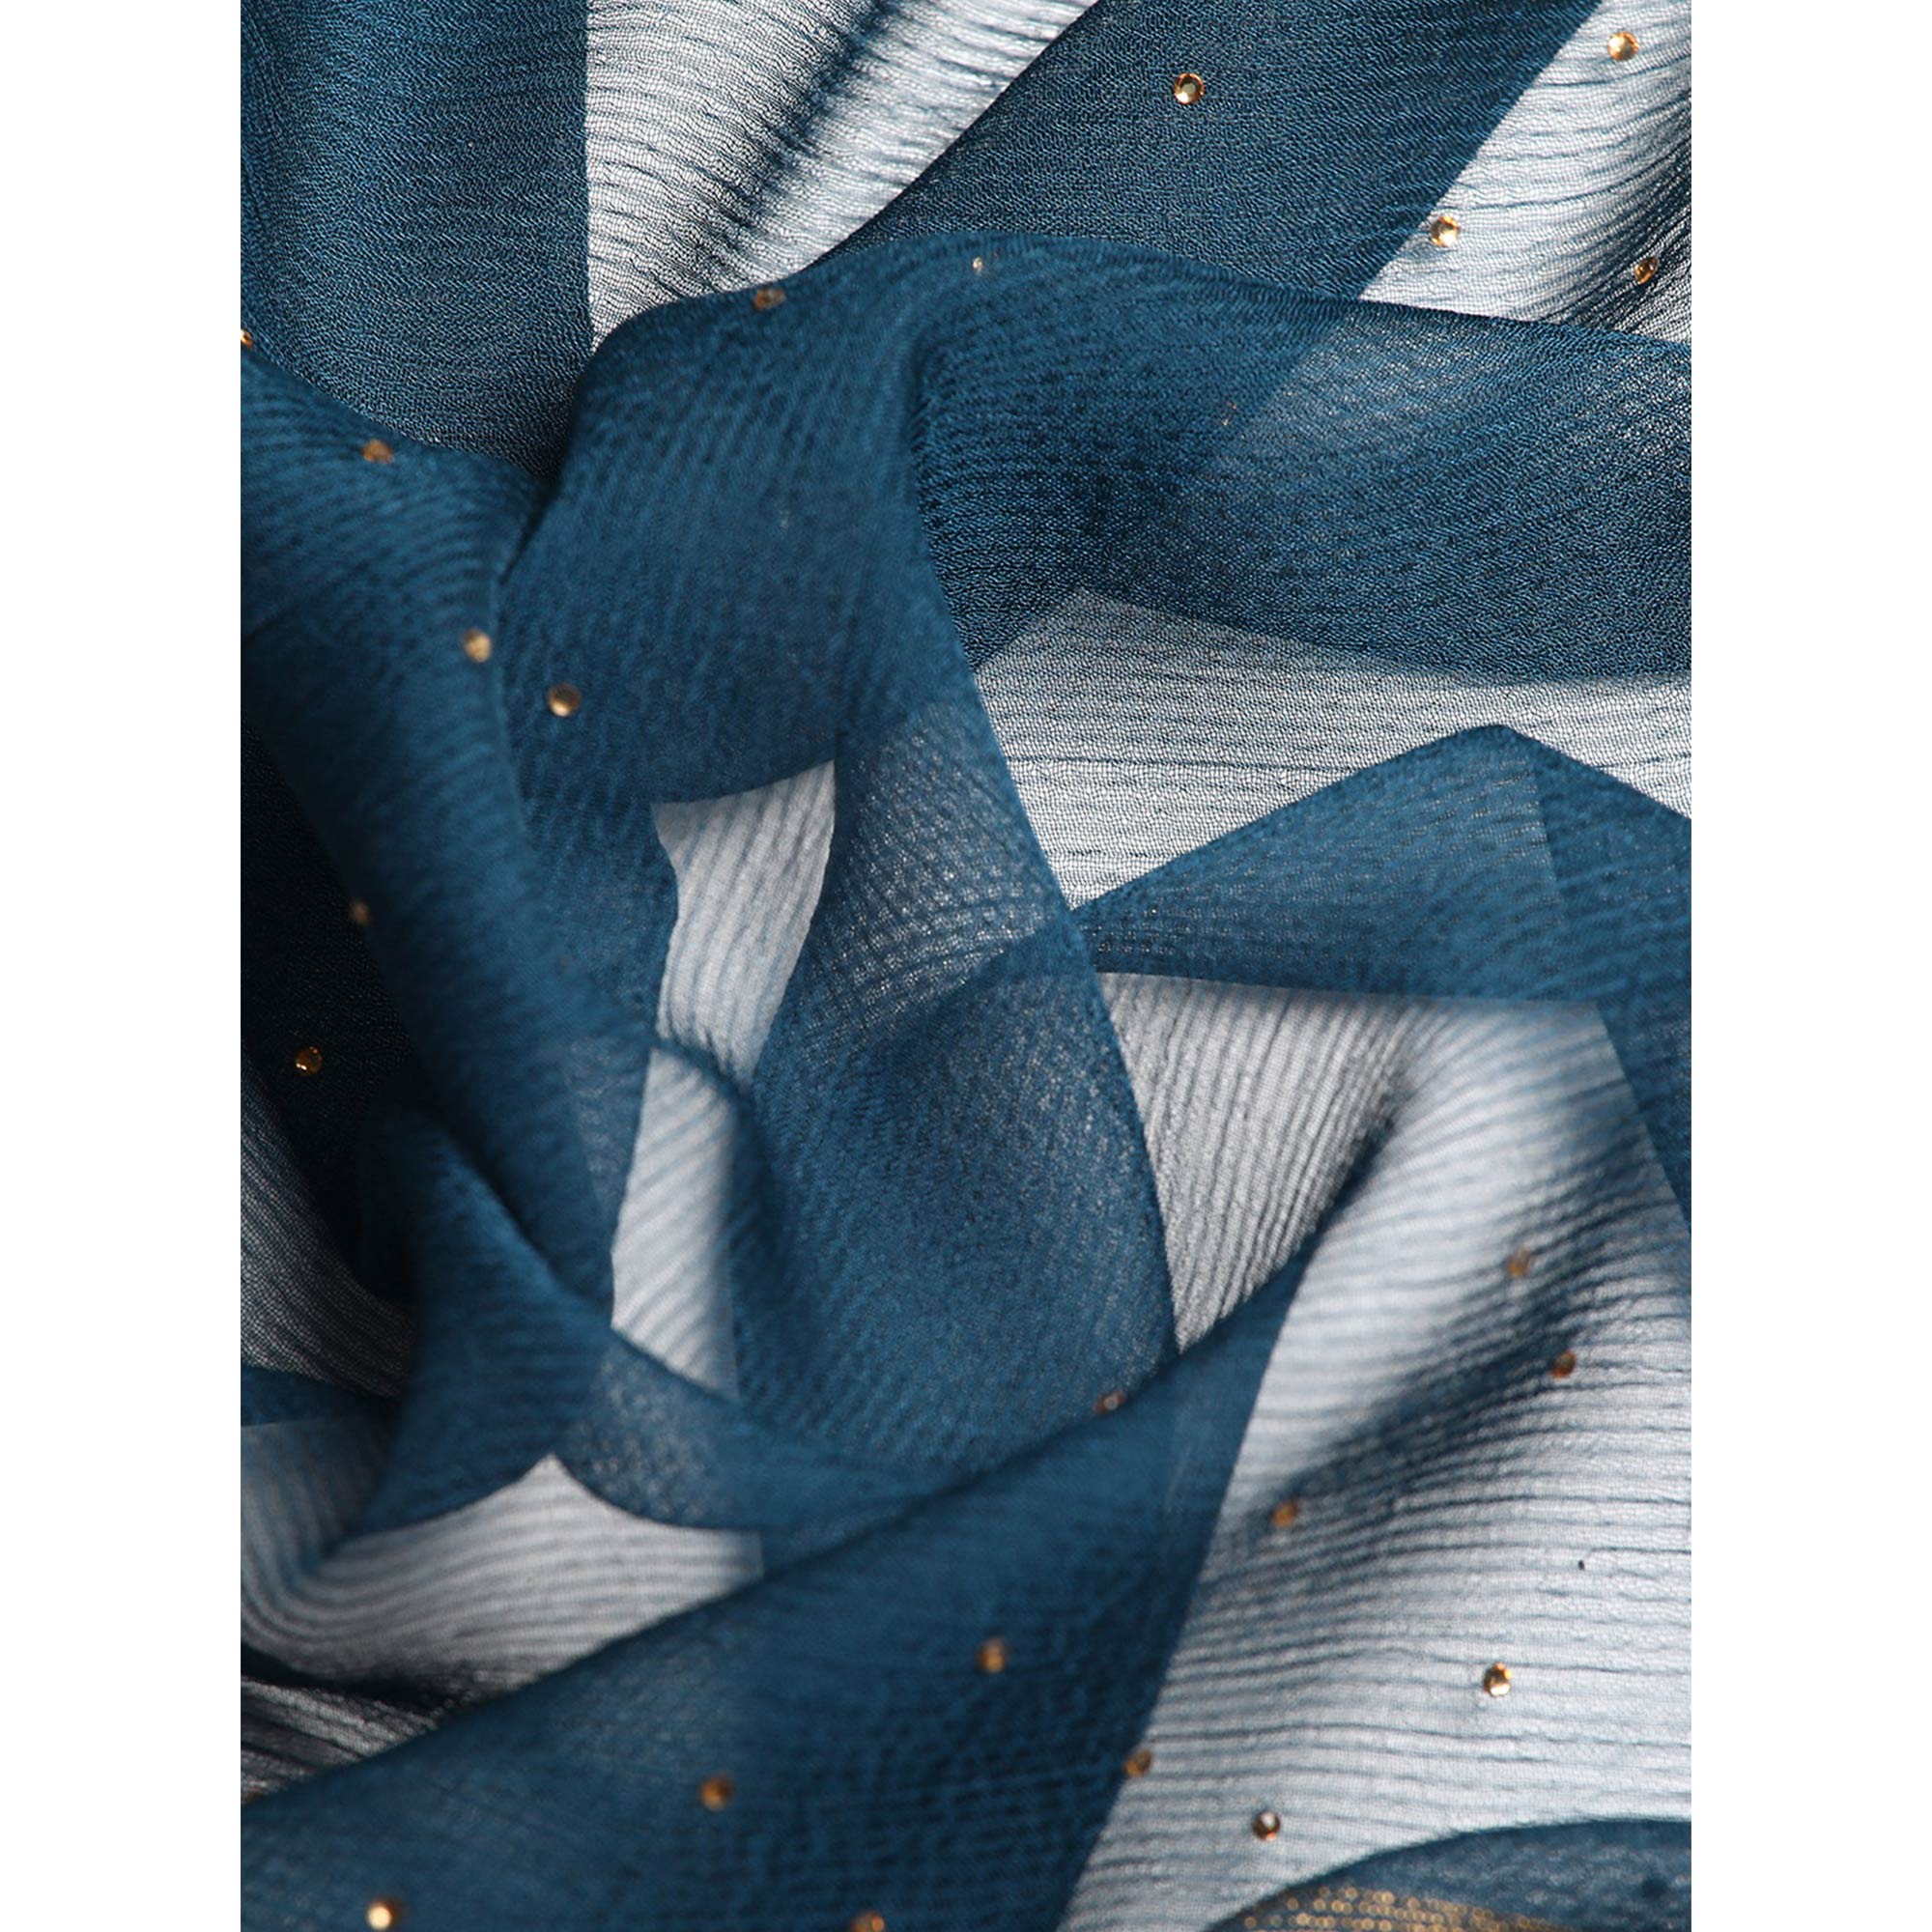 Blue Swarovski With Embroidery Work Viscose Chiffon Saree